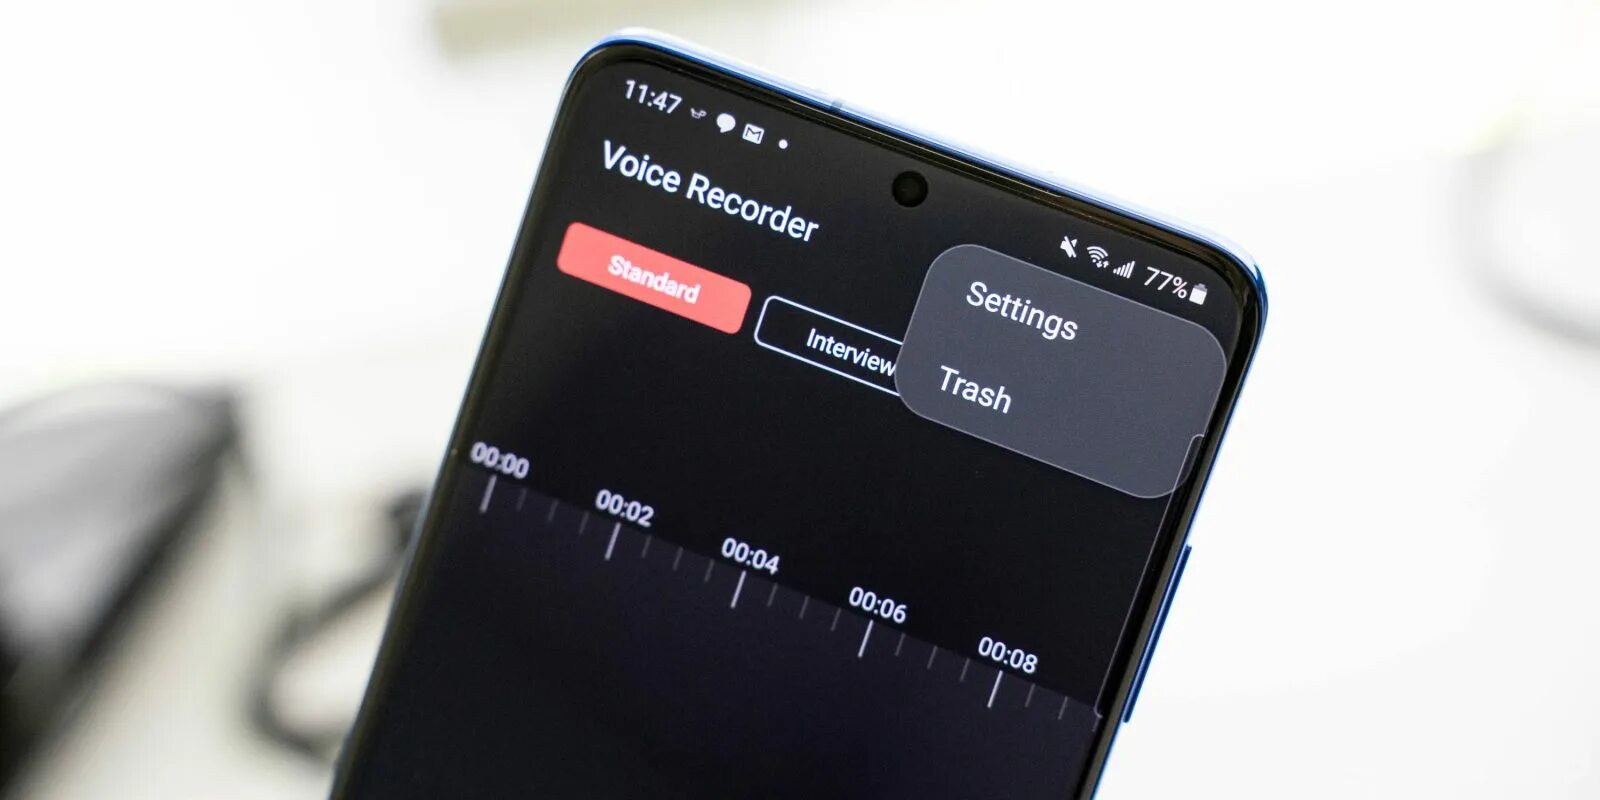 Samsung Voice Recorder. Samsung mobile 2007 Voice Recorder. Galaxy Voice. Samsung voice